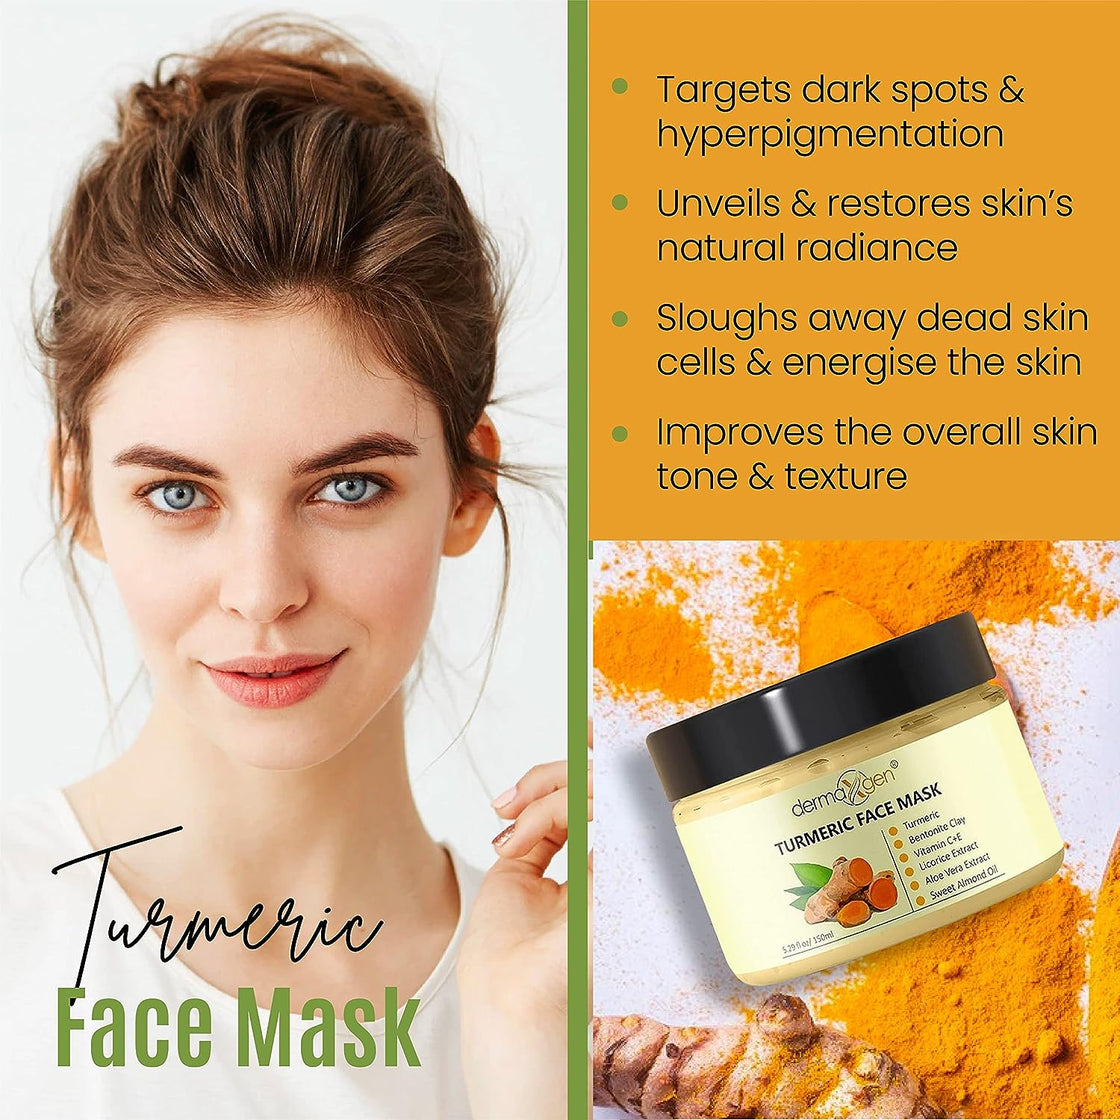 Turmeric + Vitamin C Clay Mask, DERMAXGEN Turmeric Facial Mask with Kaolin Clay and Turmeric for Dark Spots, Blemish Control, Reduce Acne, Radiant Skin, Evens Tone, Skin Care Mask - 5.29 FL OZ